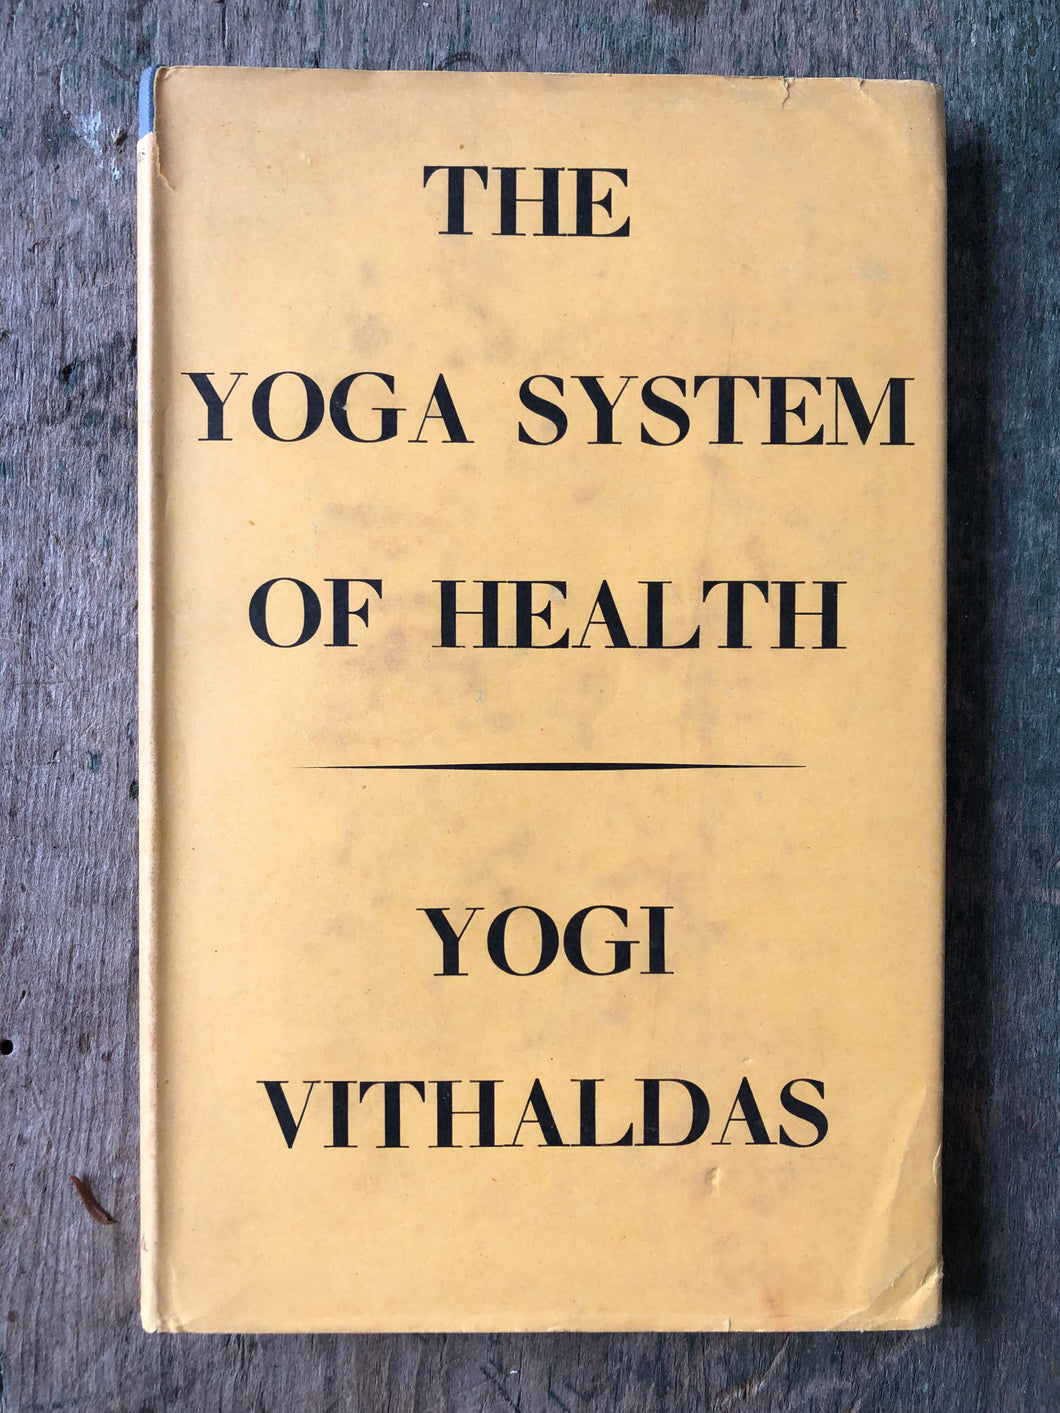 The Yoga System of Health by Yogi Vithaldas